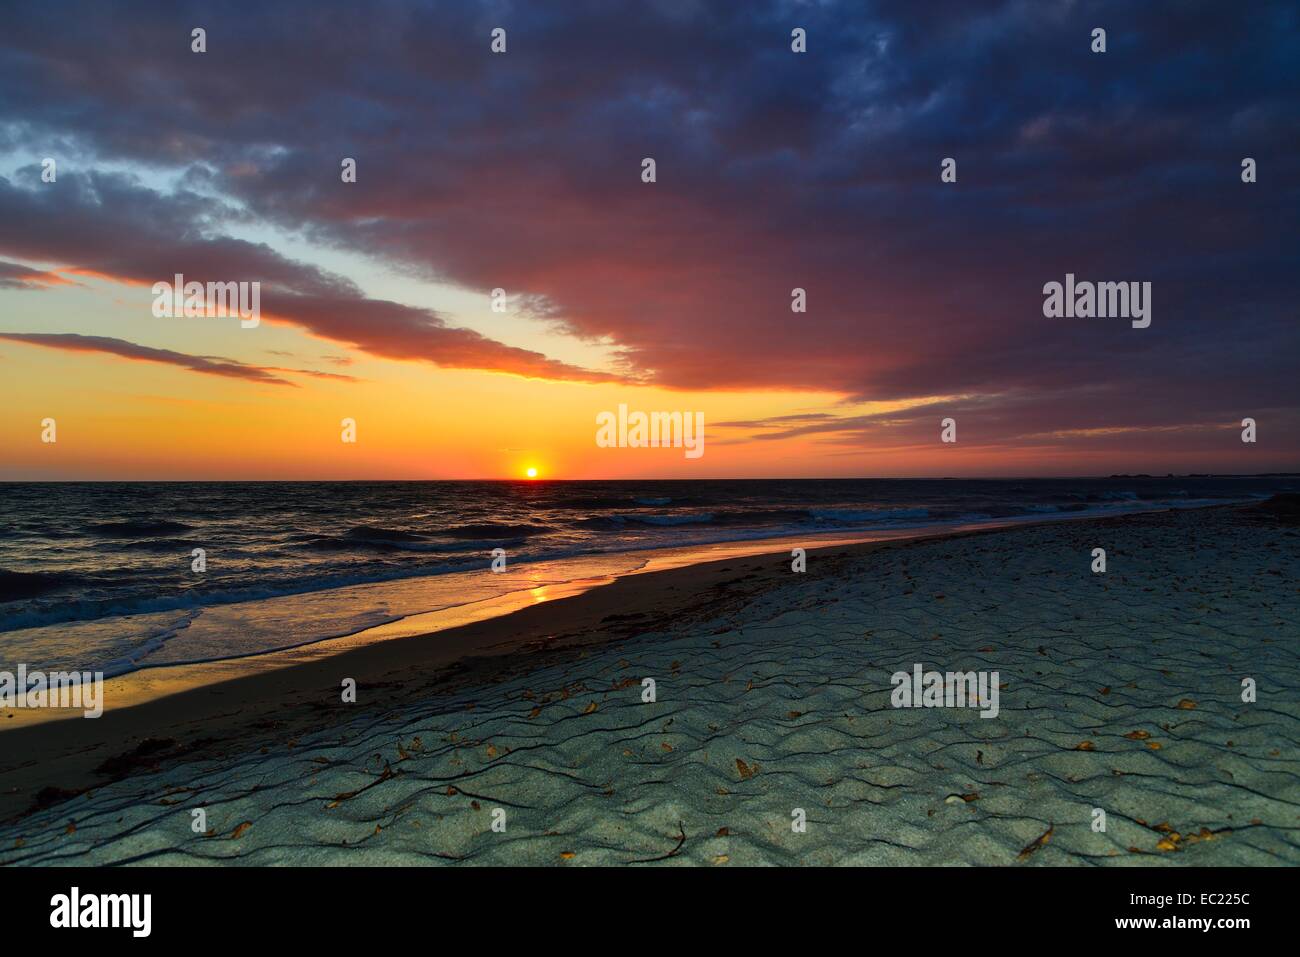 Sunset at sea with cloudy sky, Mari Ermi, Sinis Peninsula, Province of Oristano, Sardinia, Italy, Europe Stock Photo